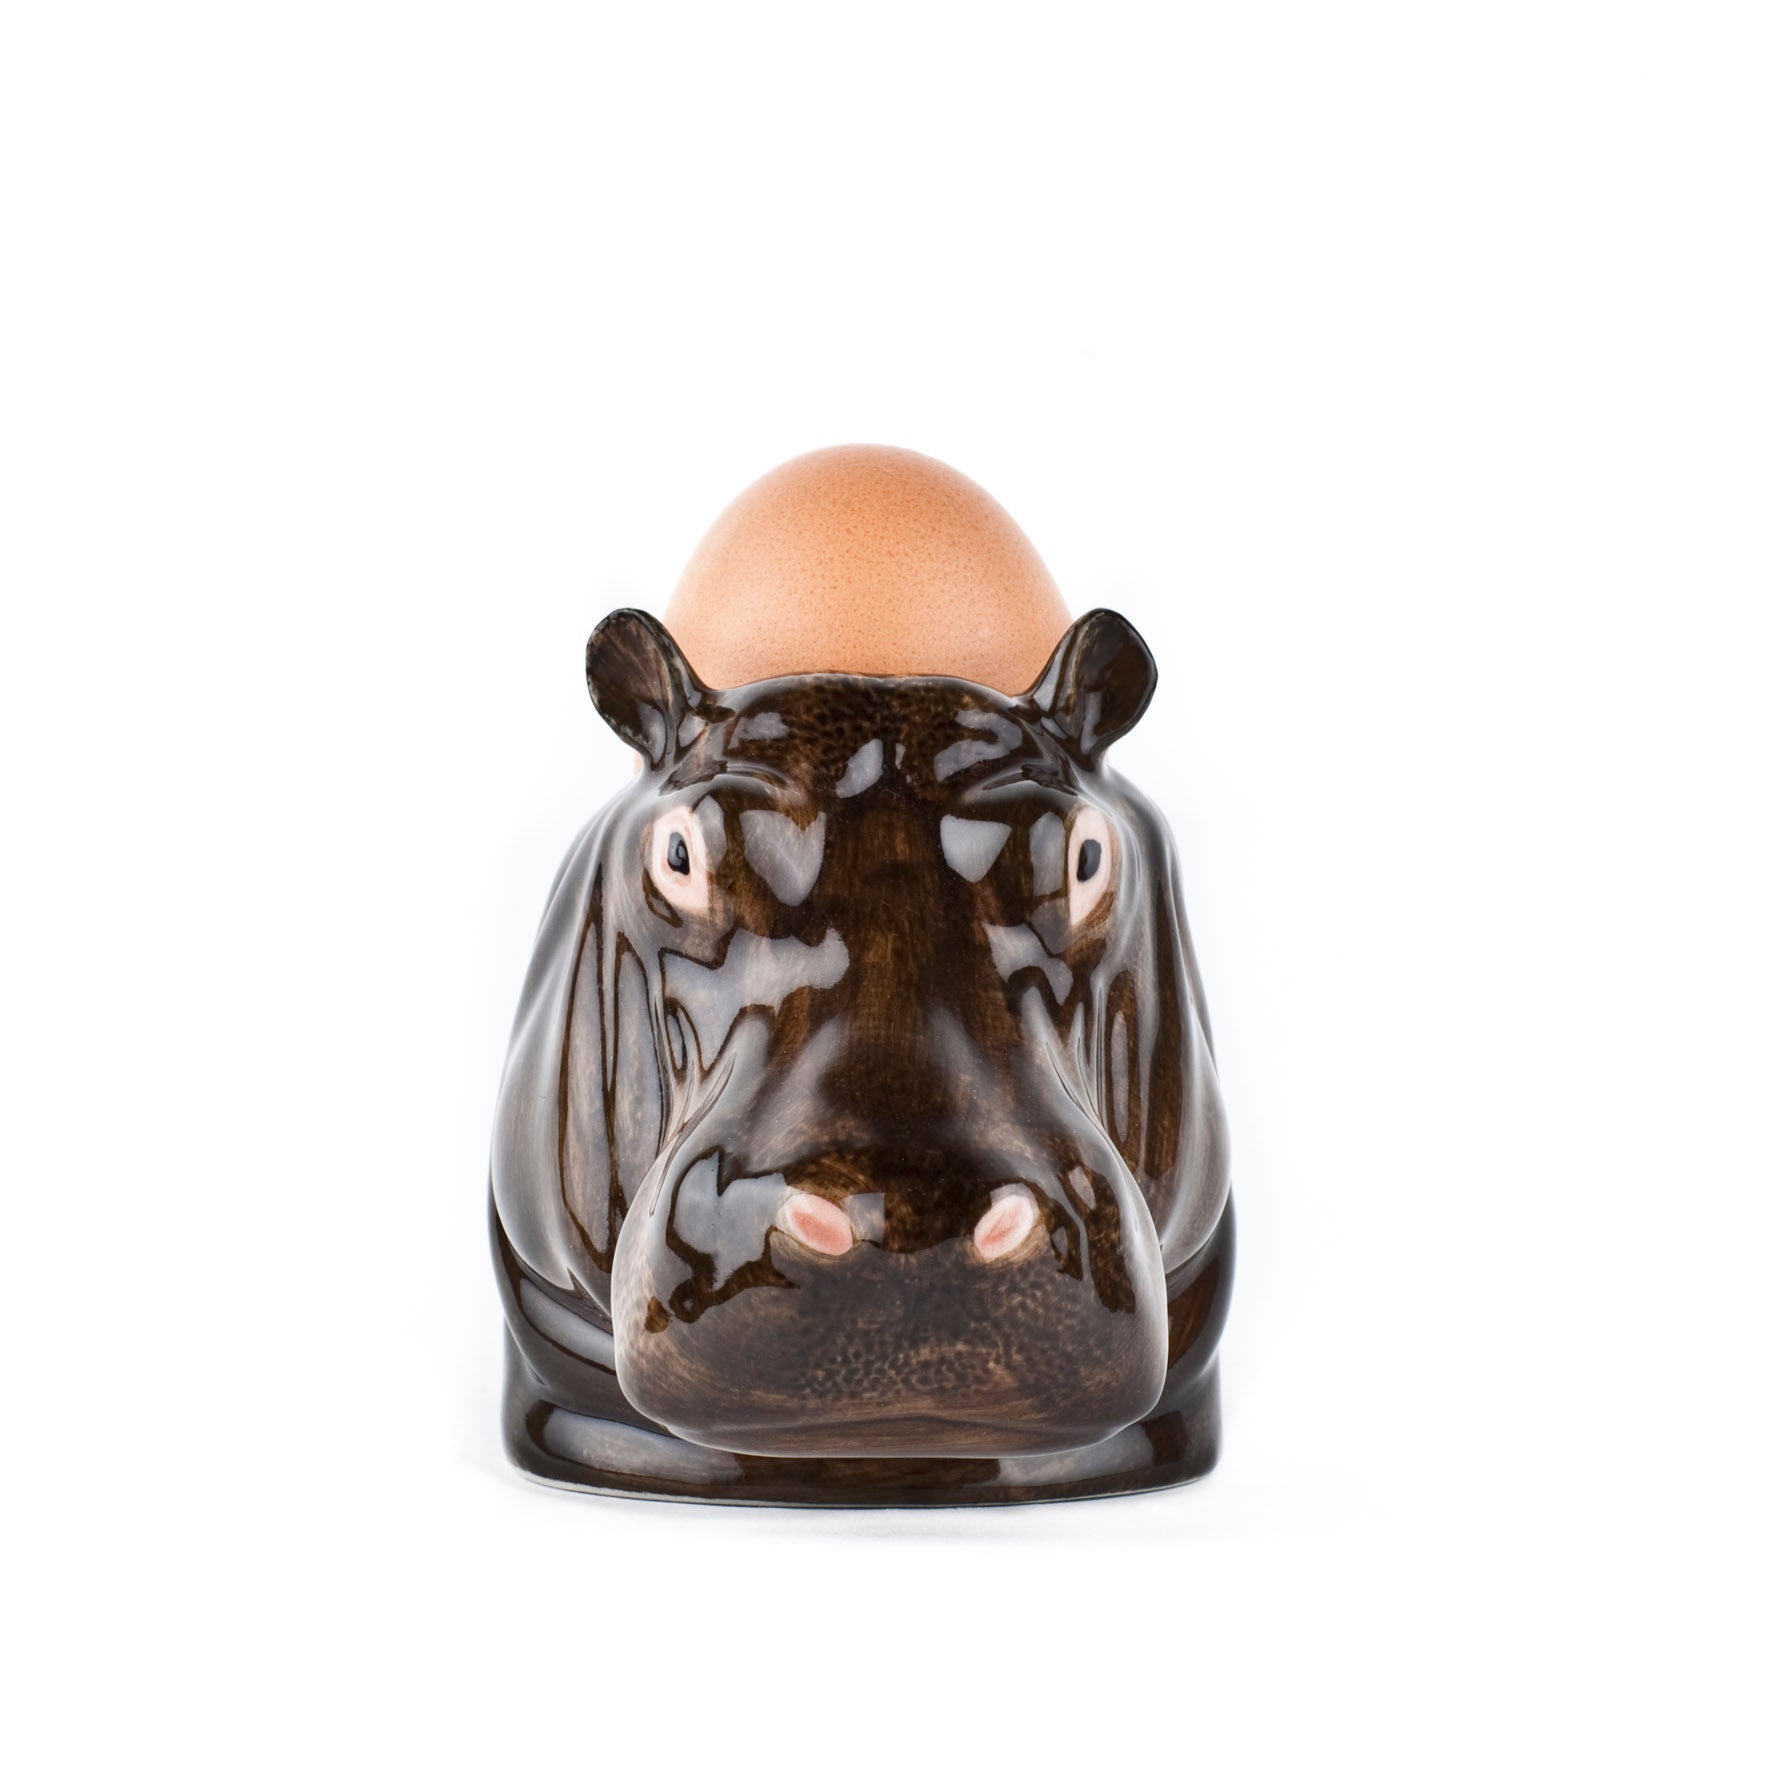 Hippo face egg cup